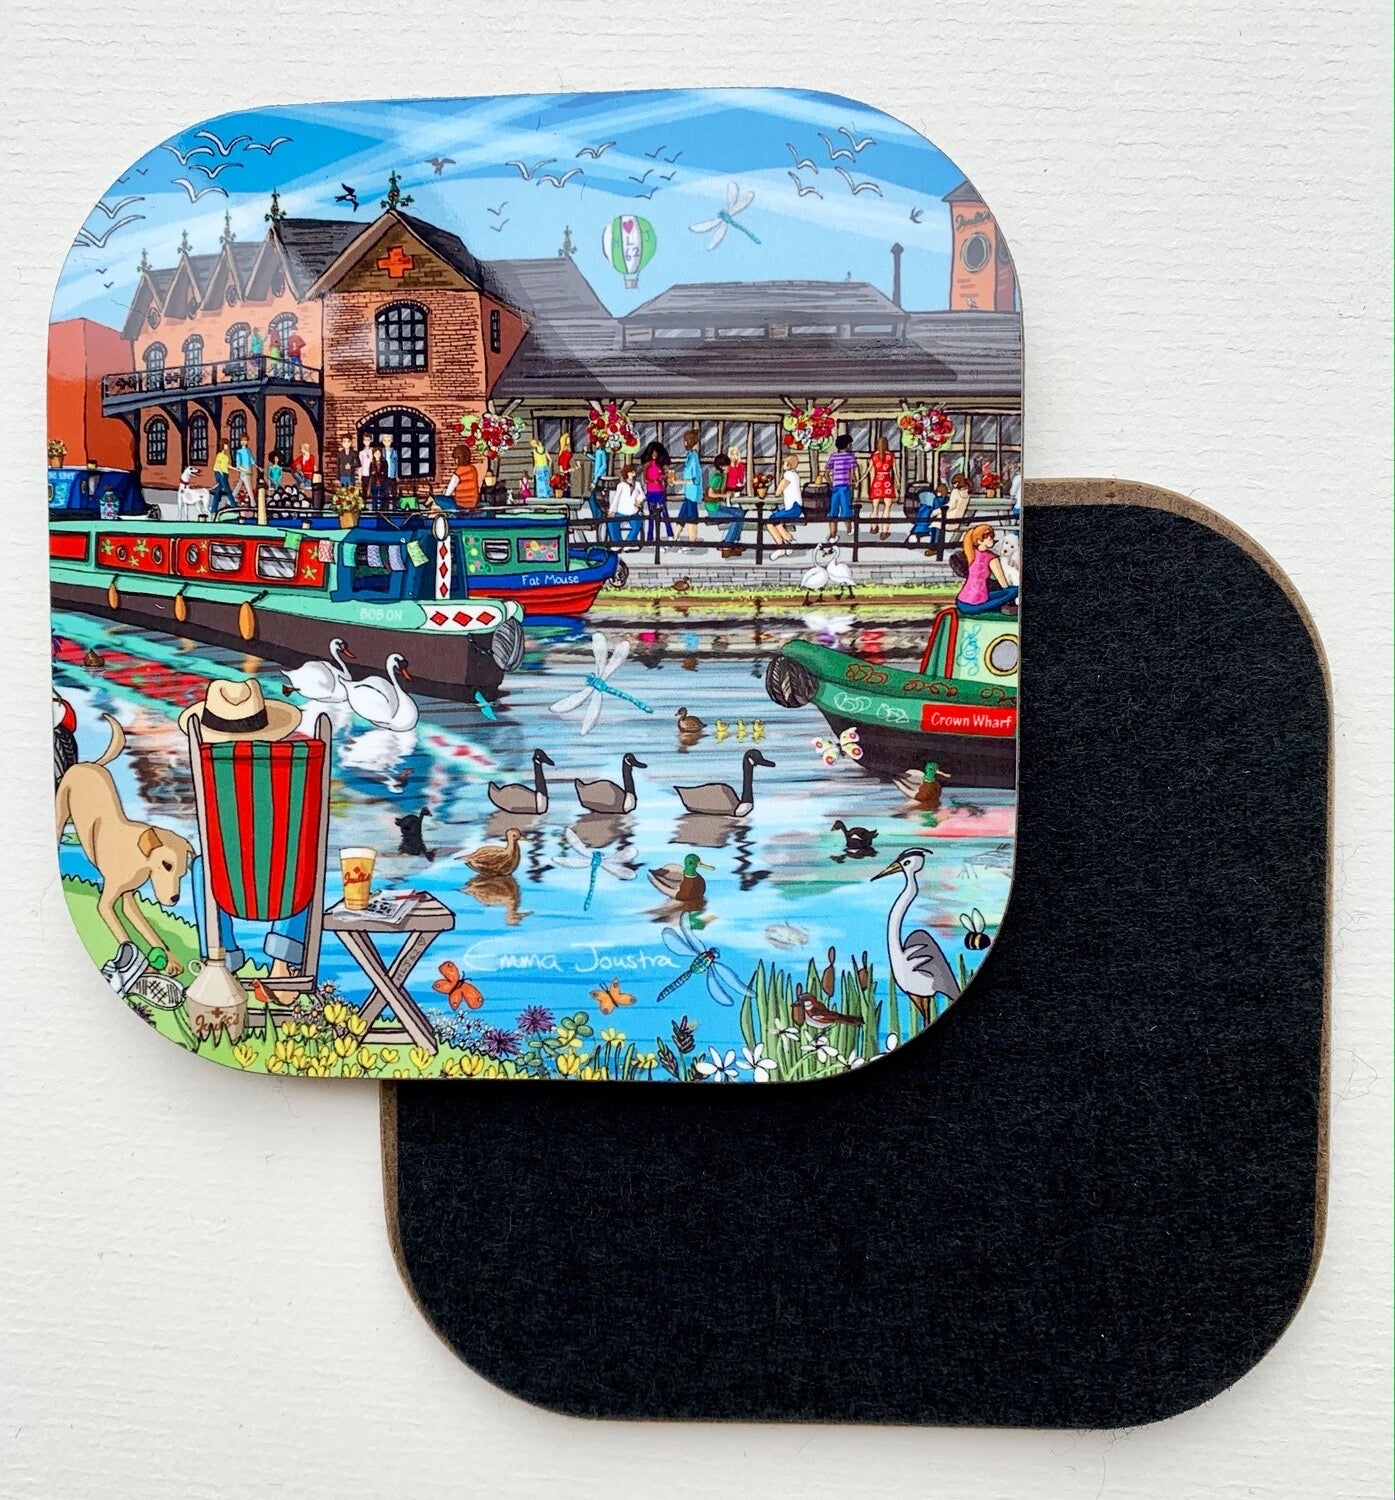 Emma Joustra Stone Joules - Crown Wharf Coaster